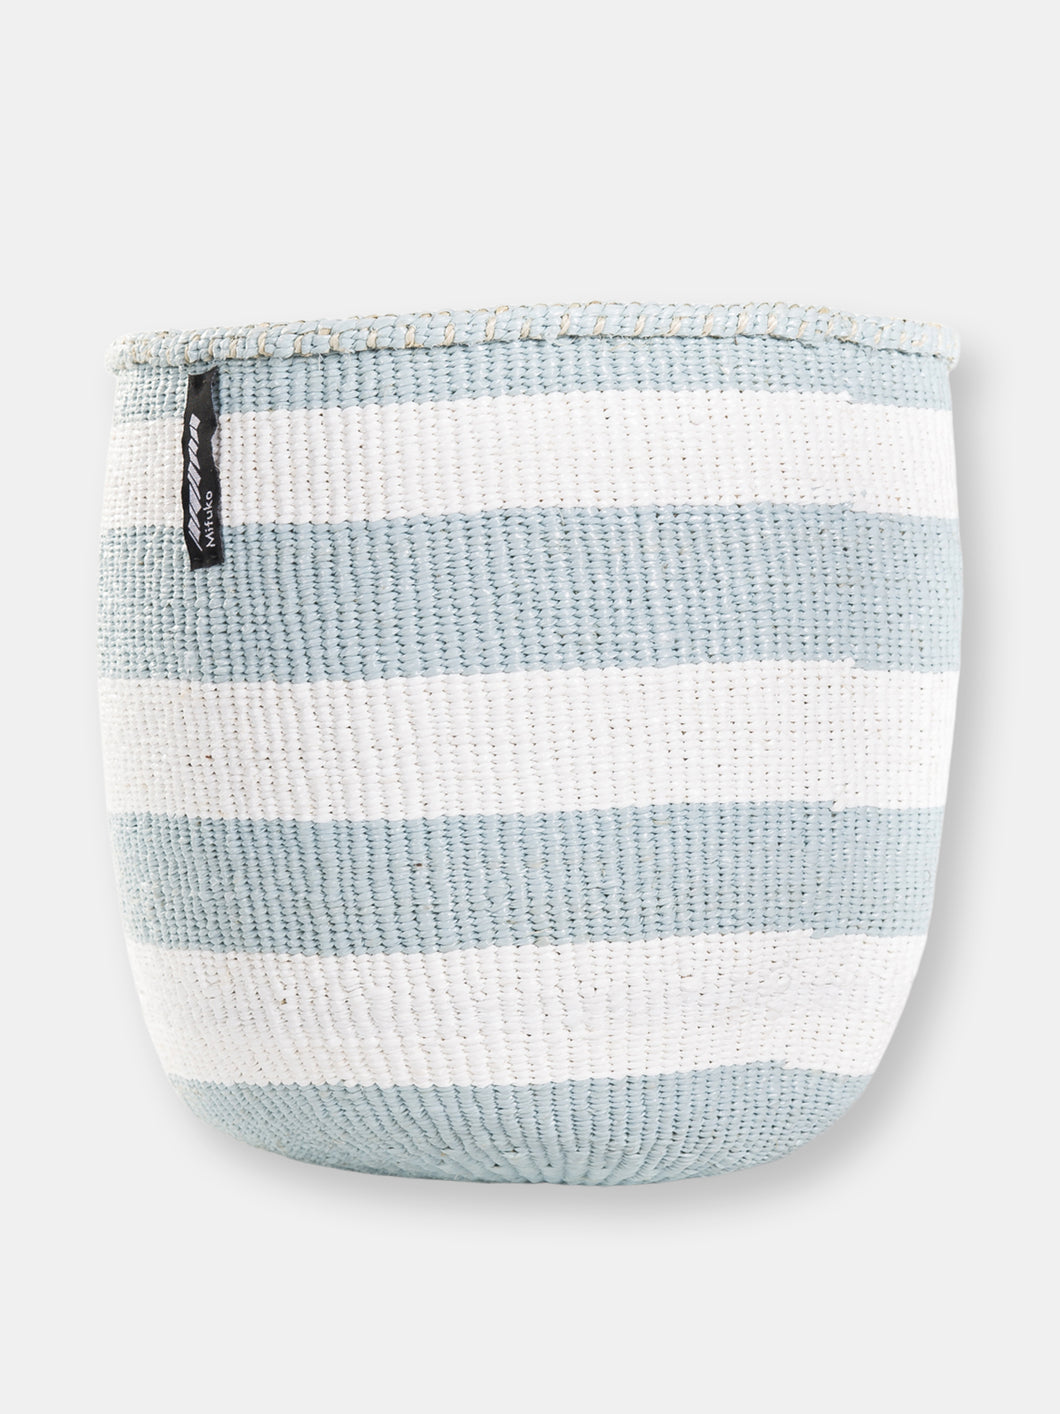 Mifuko - Medium Basket with White and Pale Blue Stripes